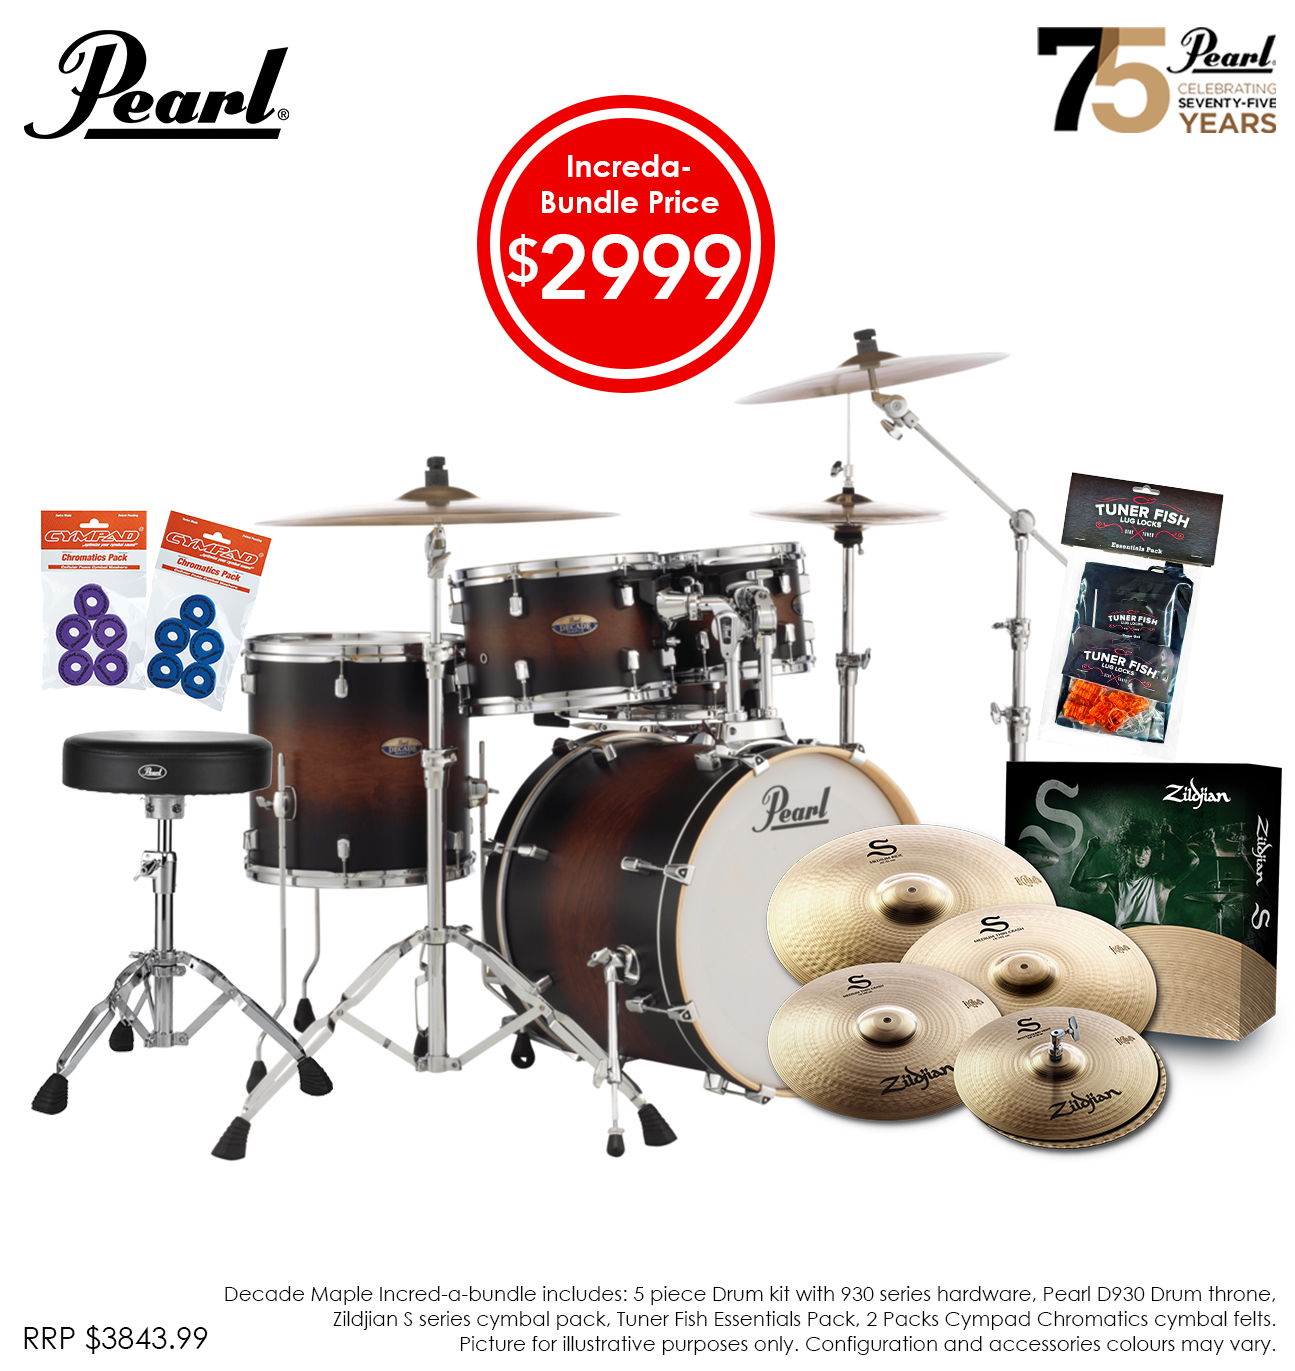 Pearl Decade Maple Increda-Bundle 22in Fusion Drum Kit - Satin